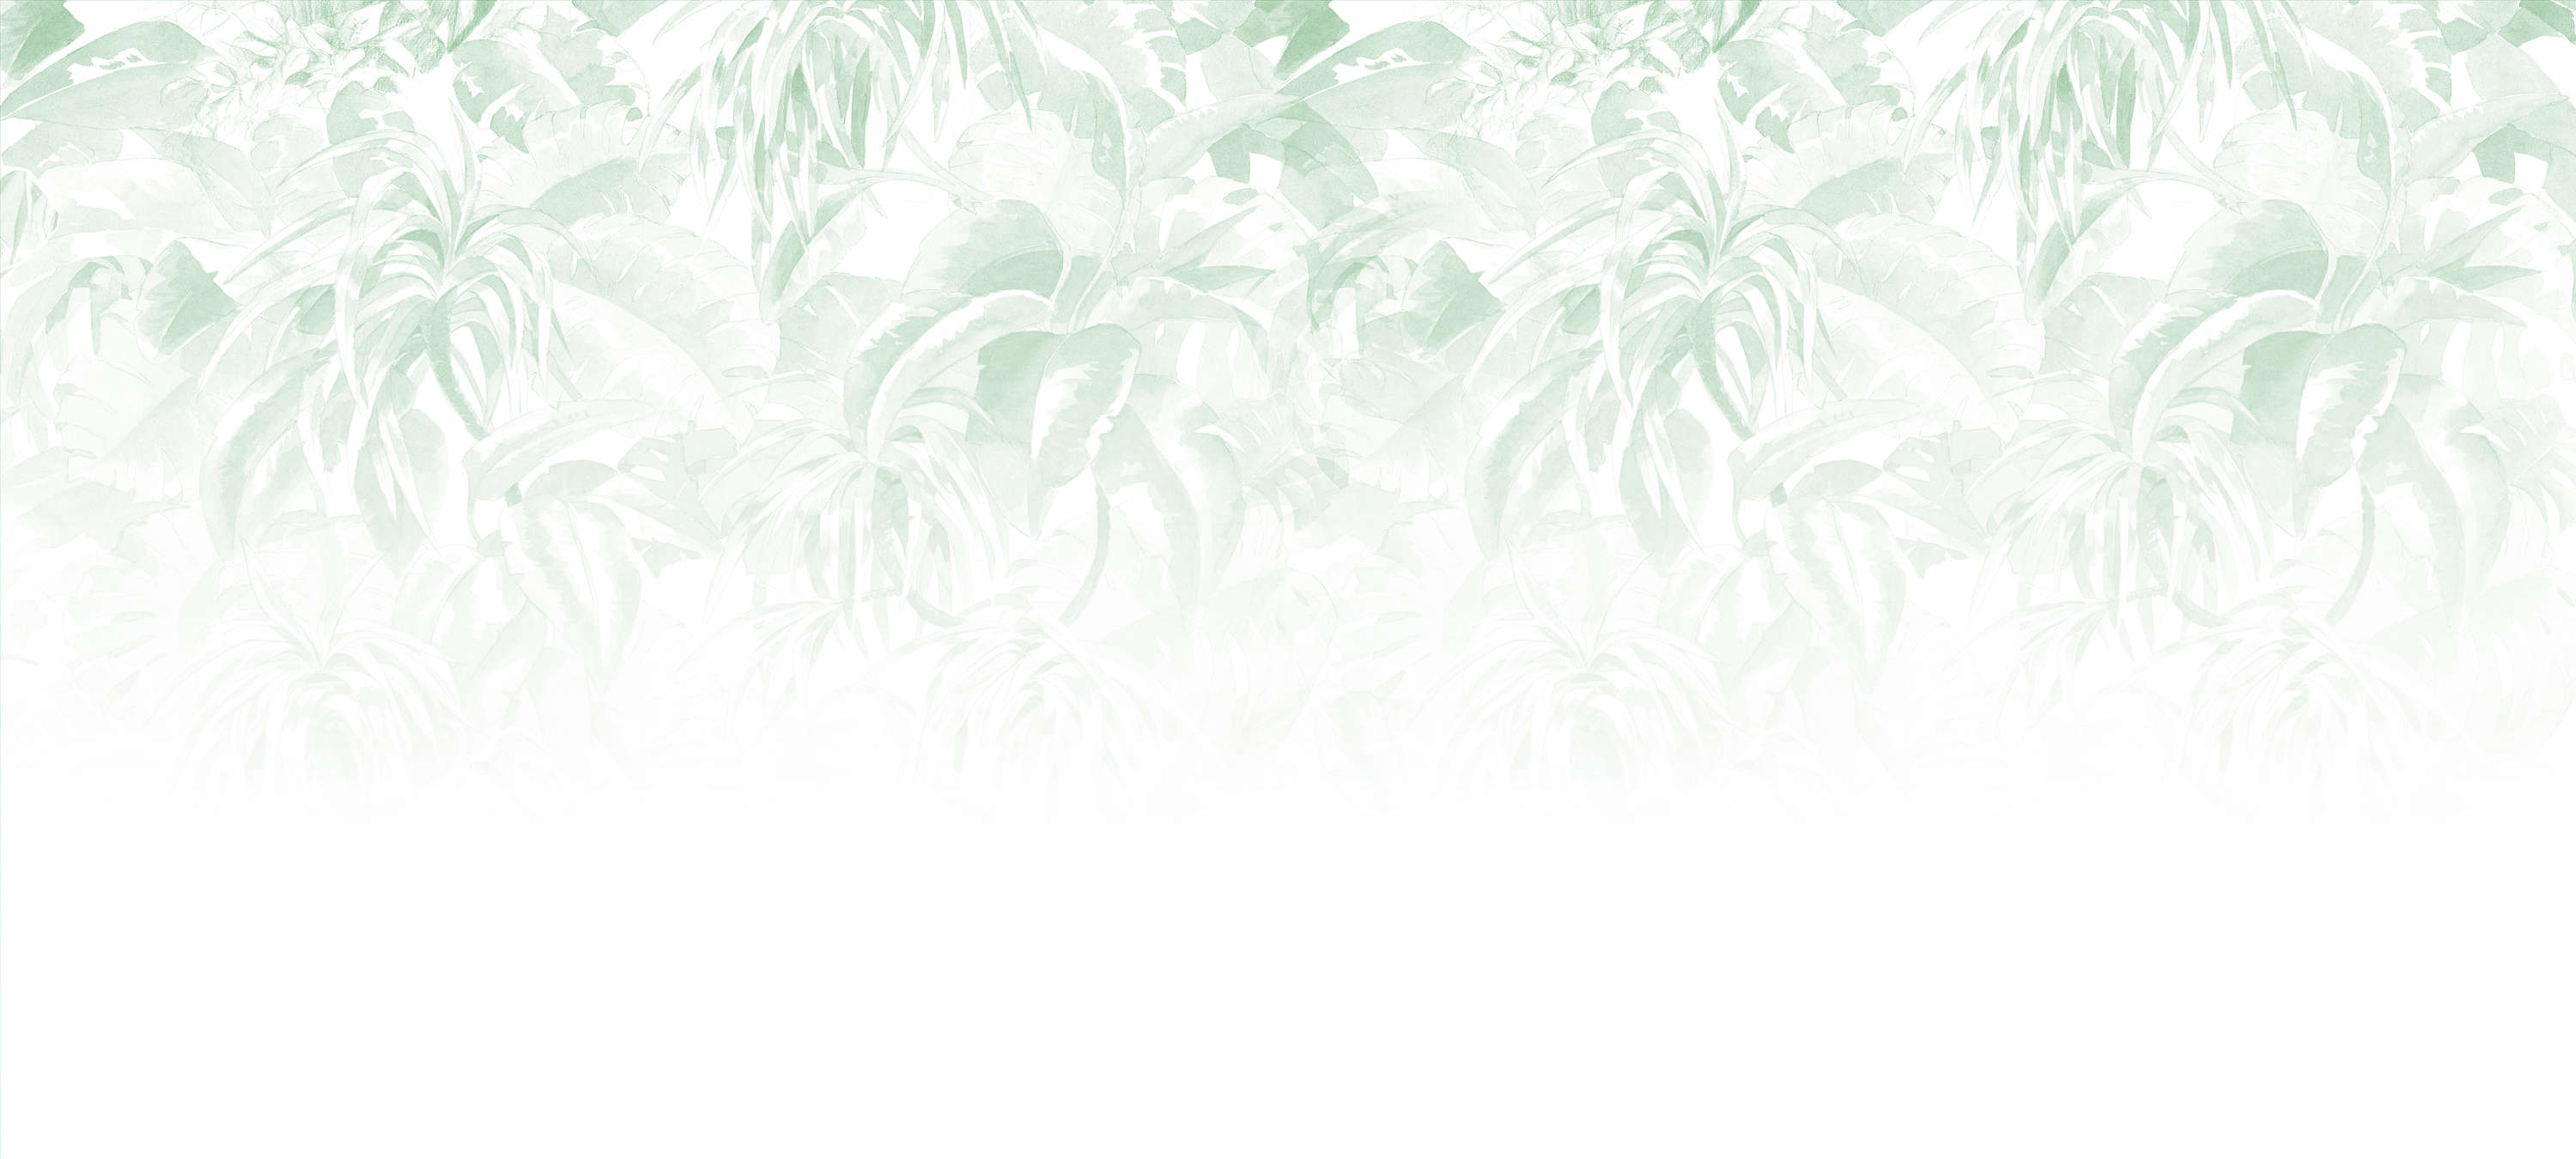             Fotomurali foglie tropicali, minimalista e naturale - Verde, Bianco
        